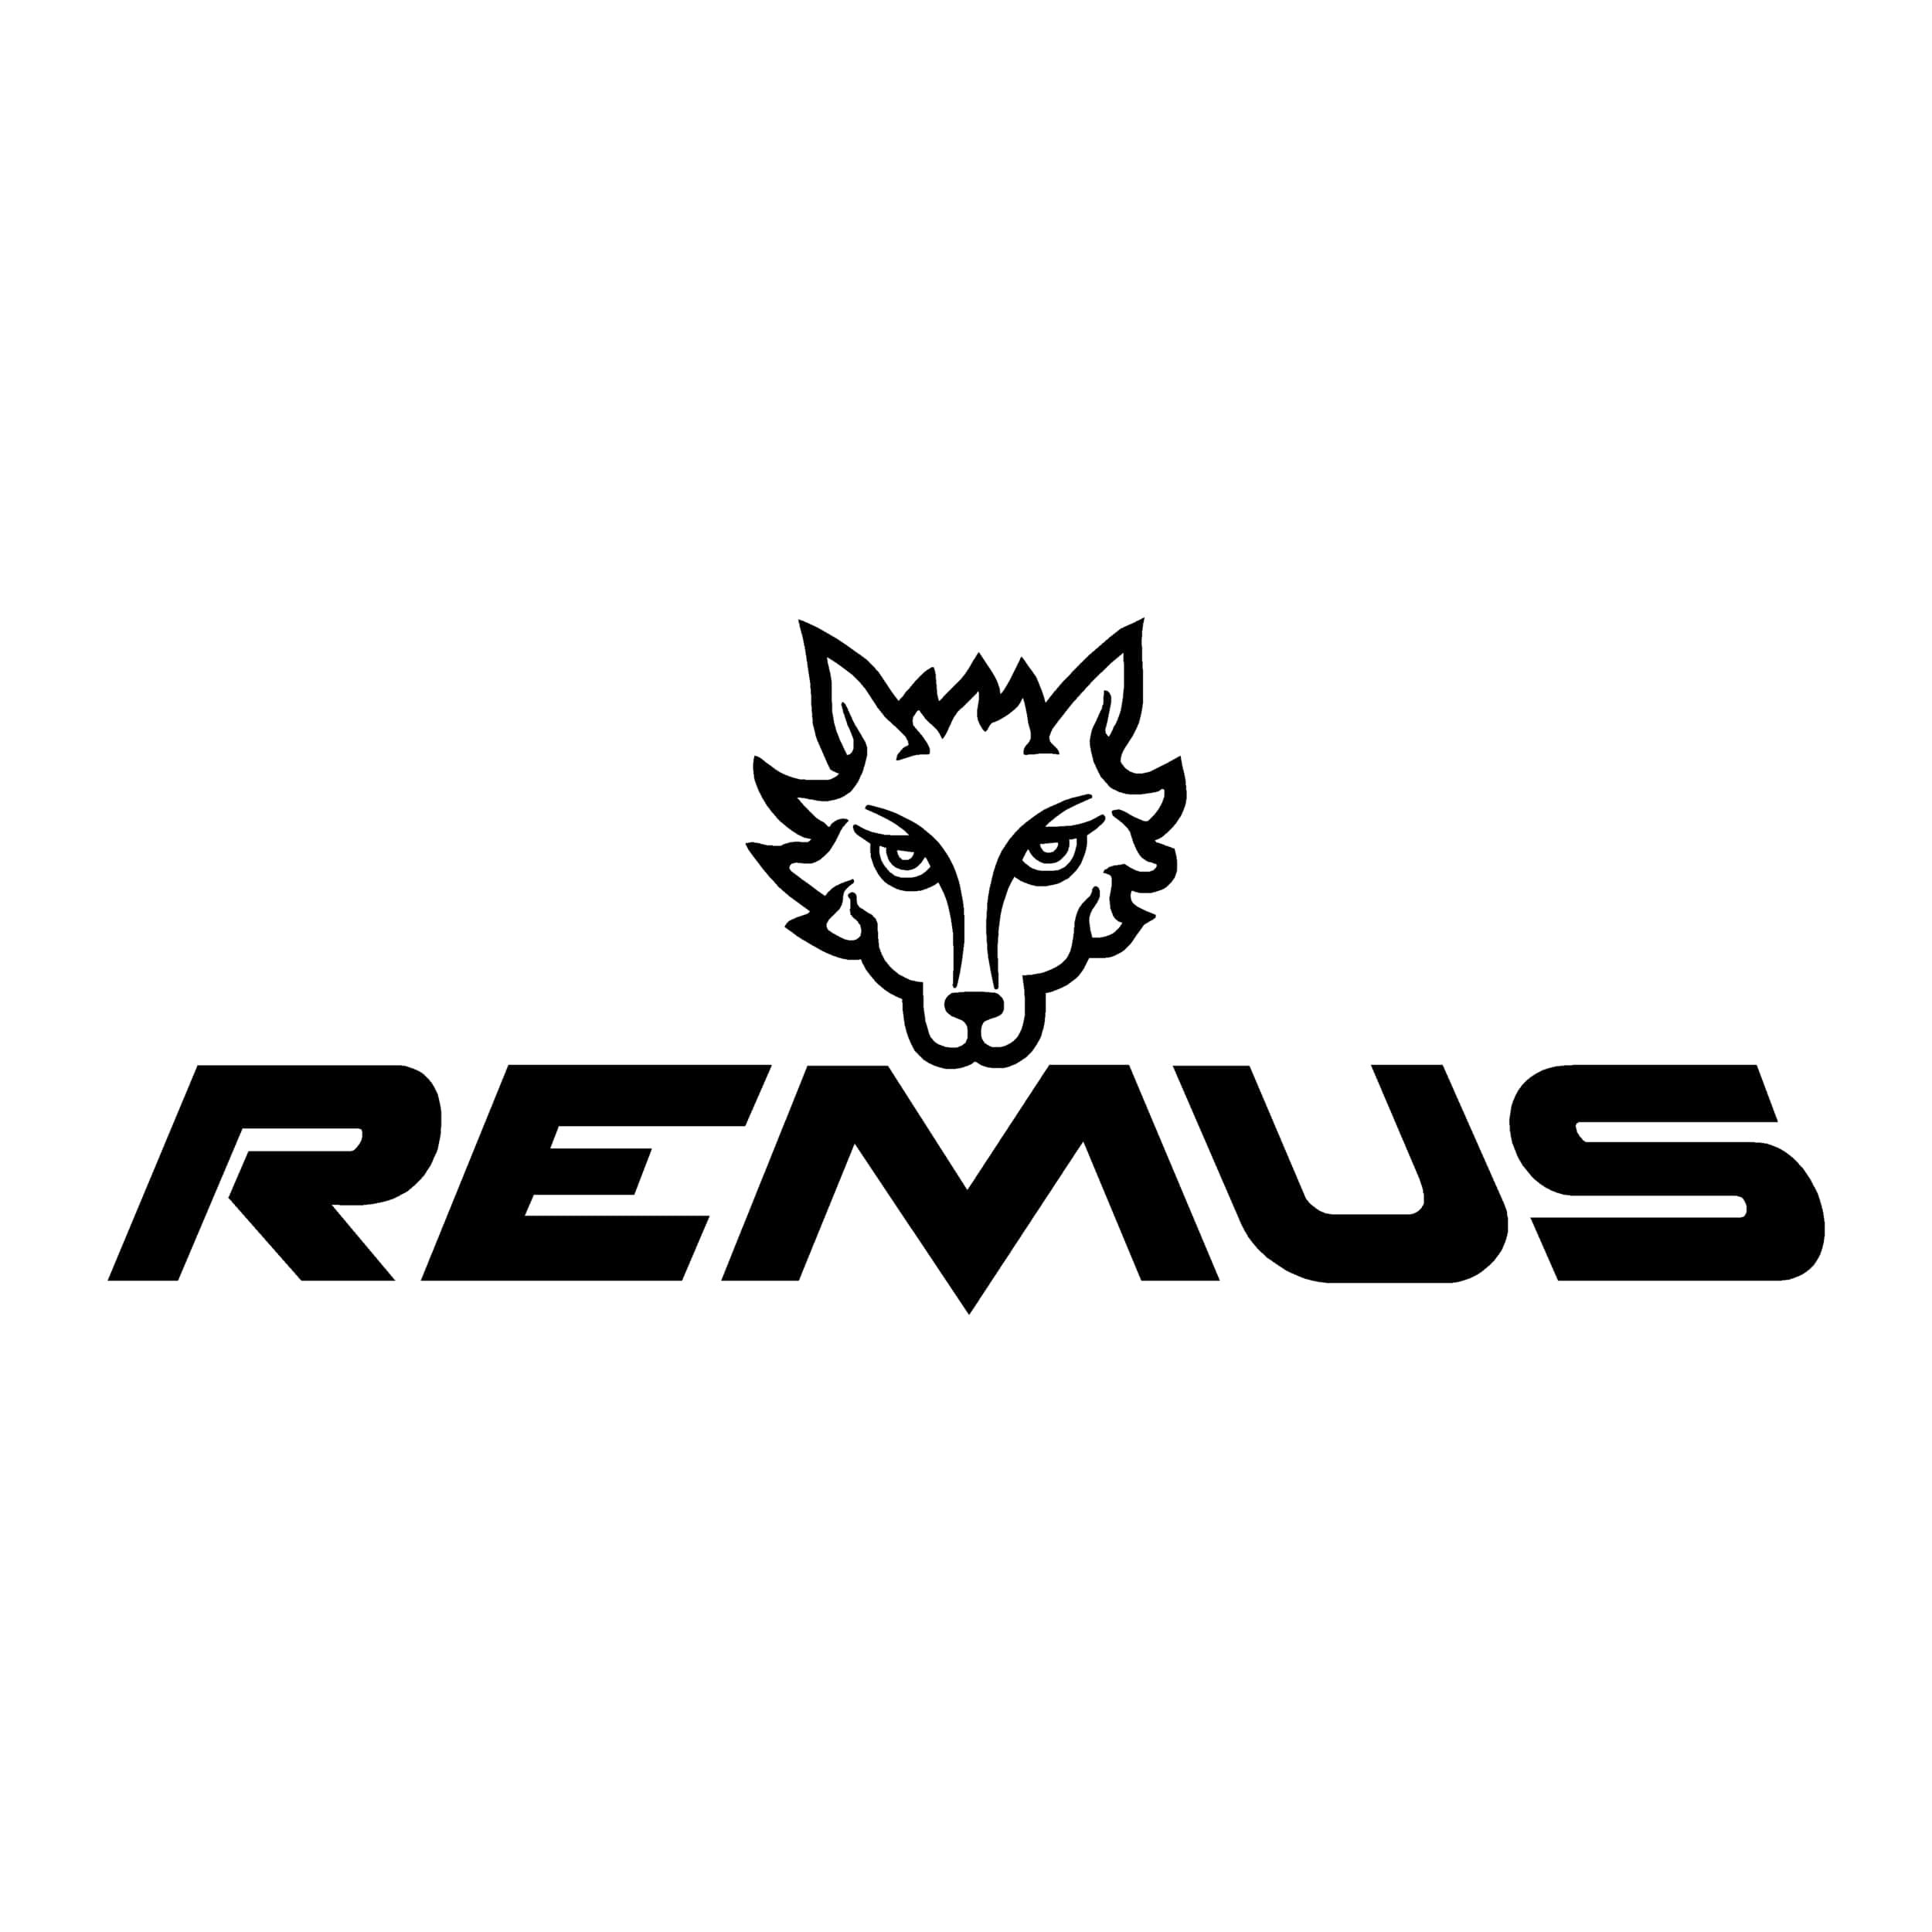 stickers-remus-ref-1-tuning-audio-4x4-sonorisation-car-auto-moto-camion-competition-deco-rallye-autocollant-min